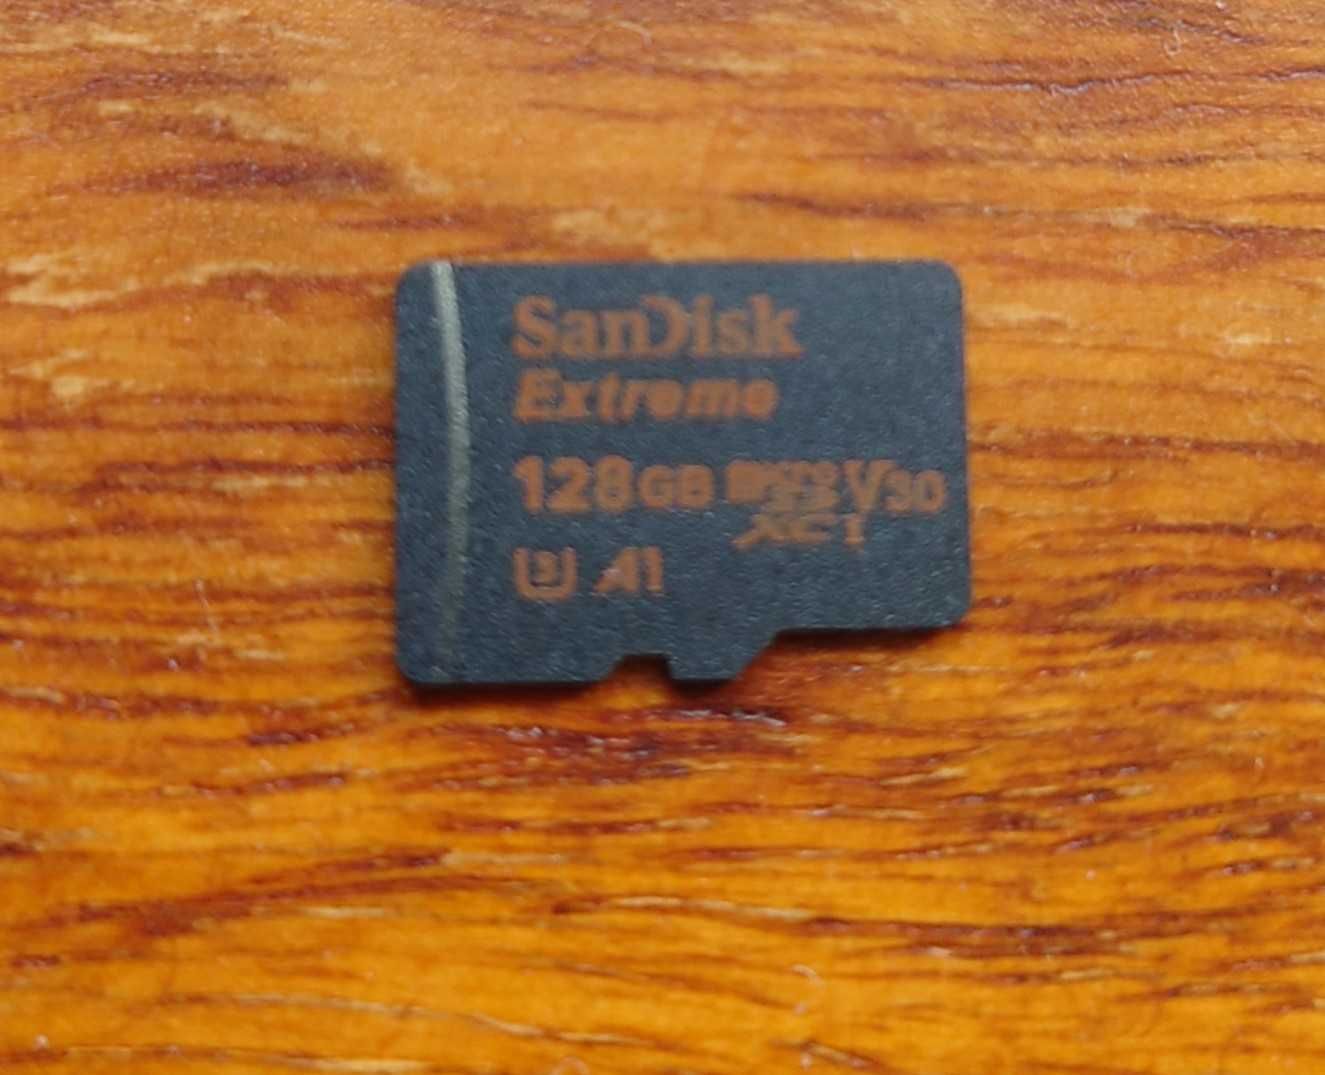 SanDisk Extreme microSDXC 128GB V30 100/90 MB/s A1 U3 4K Karta Pamięci